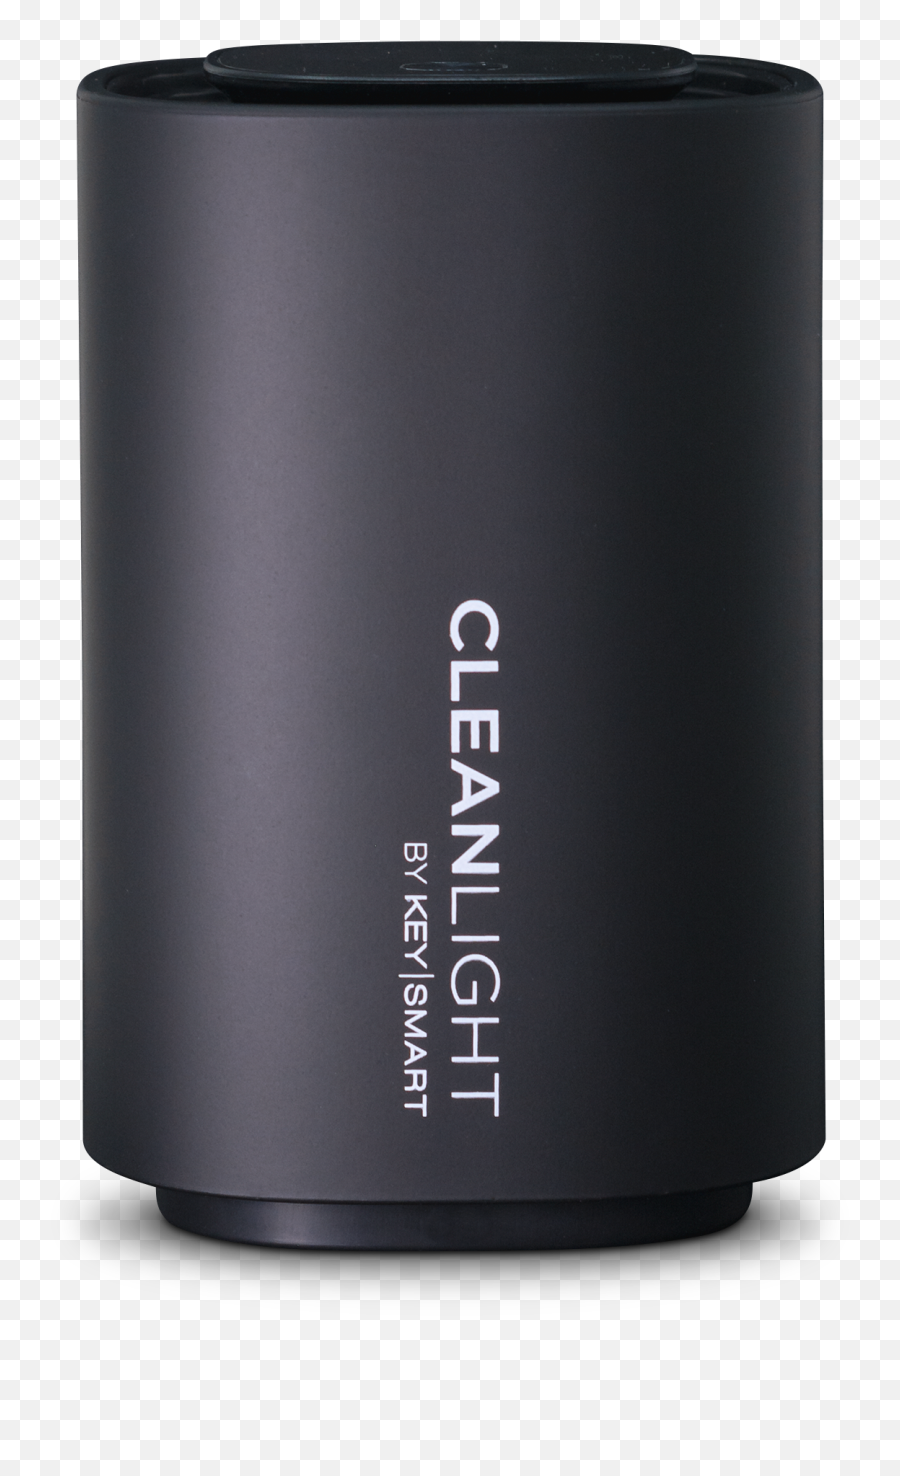 Cleanlight Air Pro Ionic Uv Purifier With Quality Monitoring - Black Keysmart Cleanlight Air Uv Air Purifier Png,Jawbone Icon Radio Shack